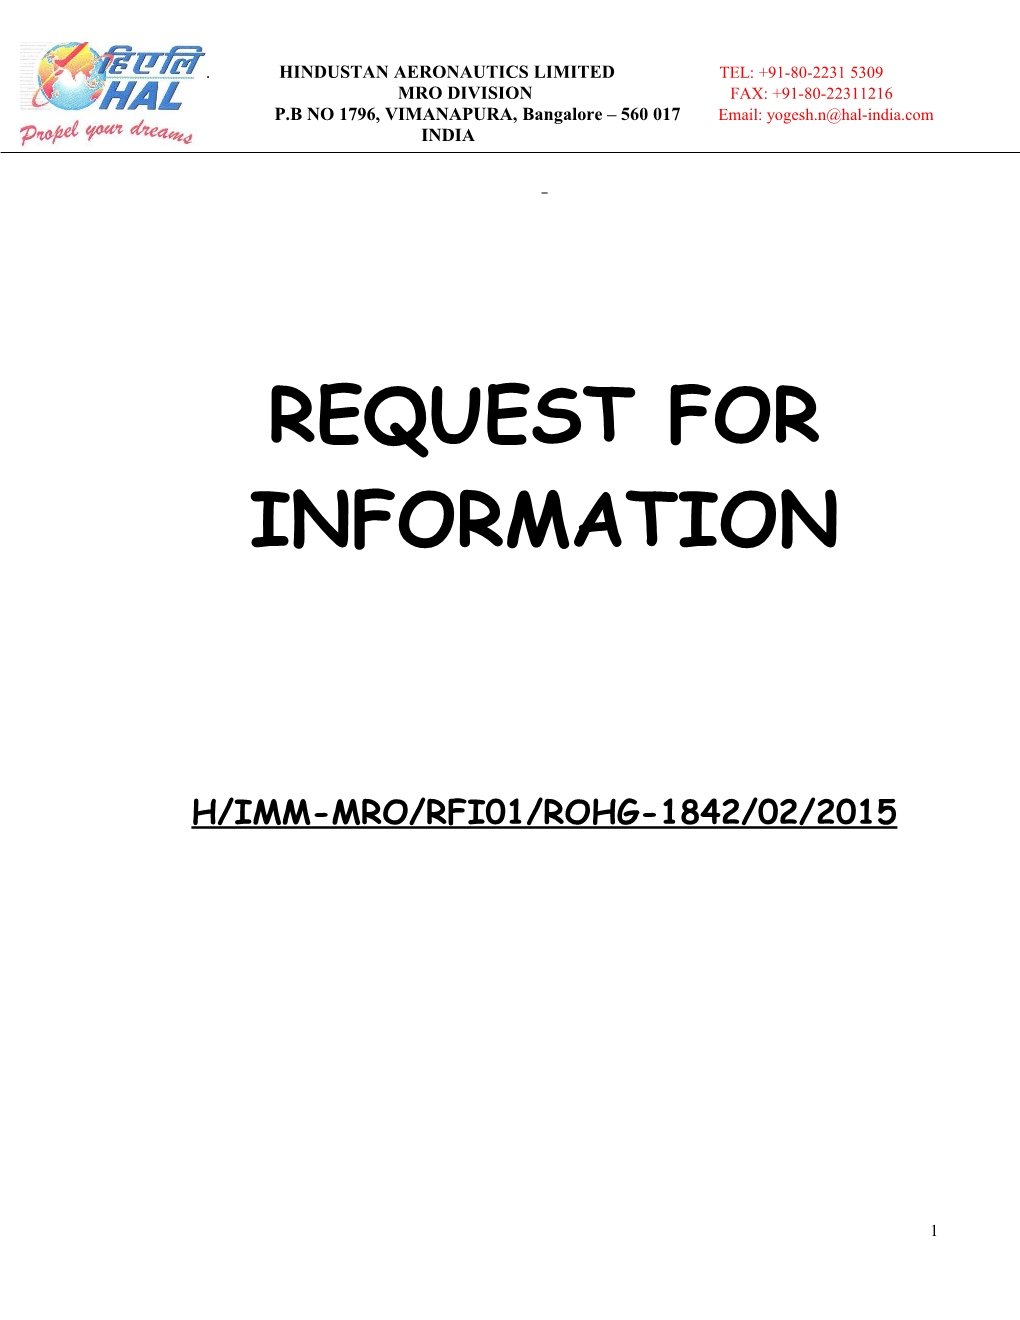 Mro Division Fax: +91-80-22311216